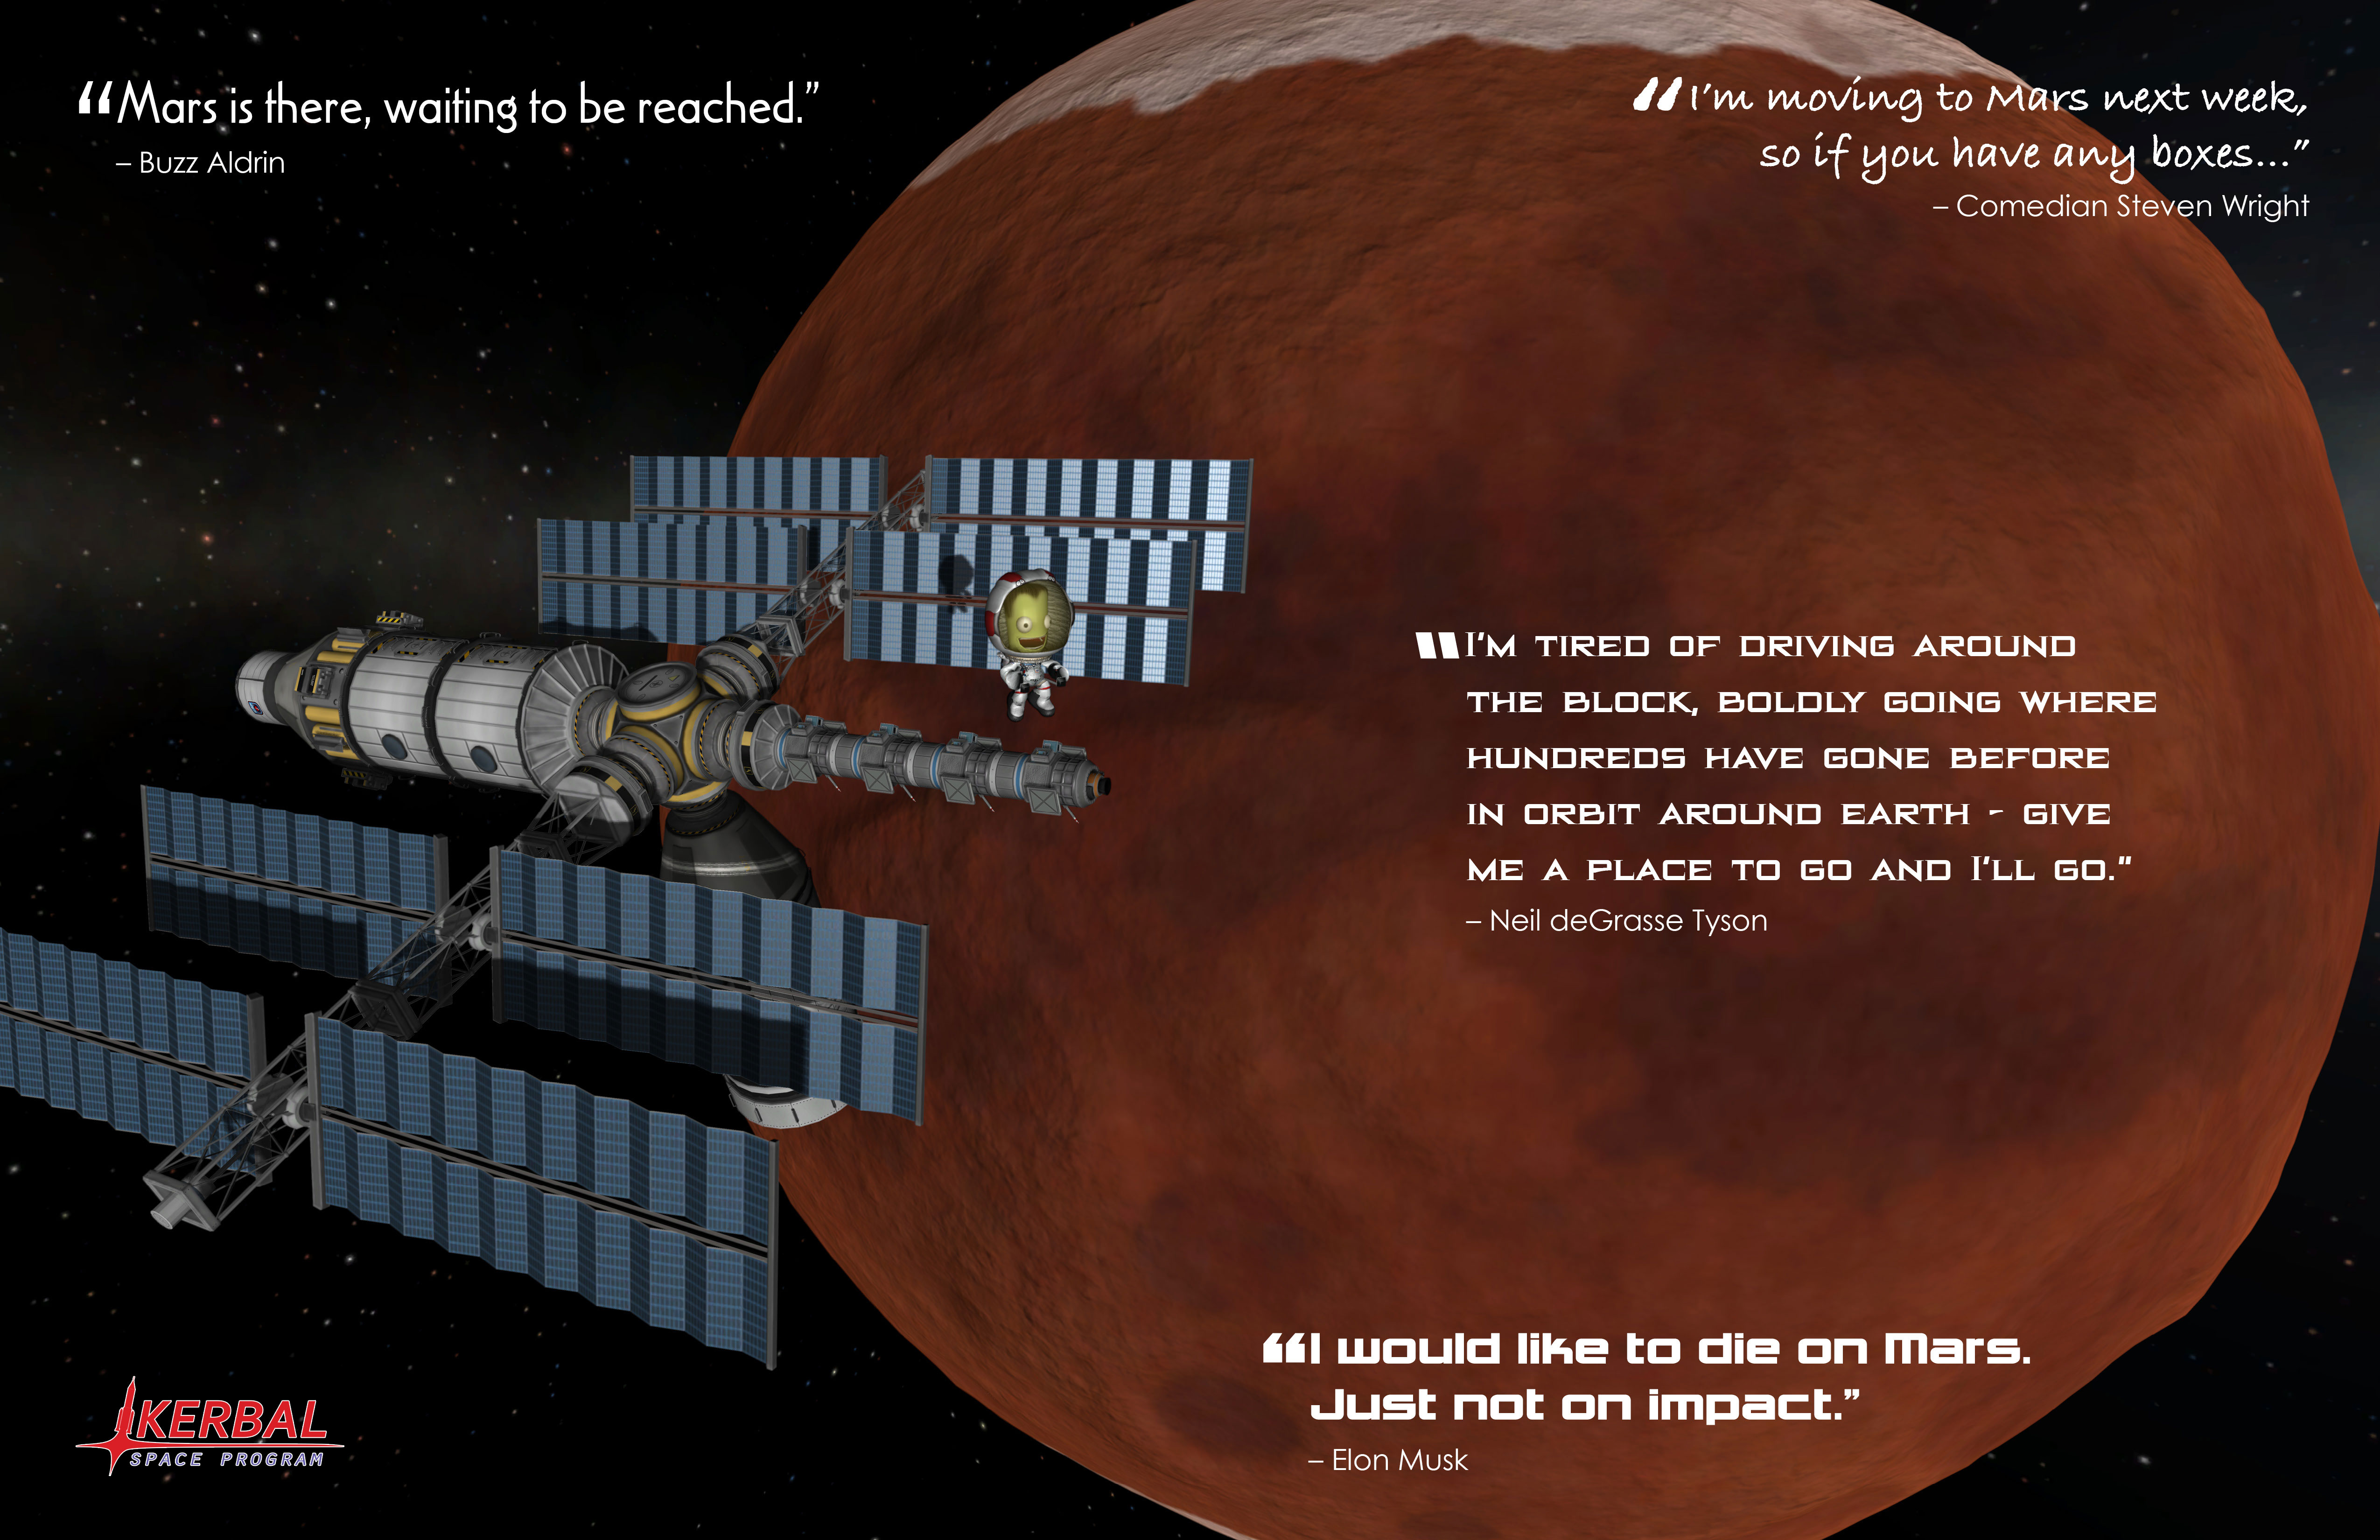 KERBAL SPACE PROGRAM DUNA (Mars) POSTER. Credit: Squad, Monkey Squad S.A de C.V.